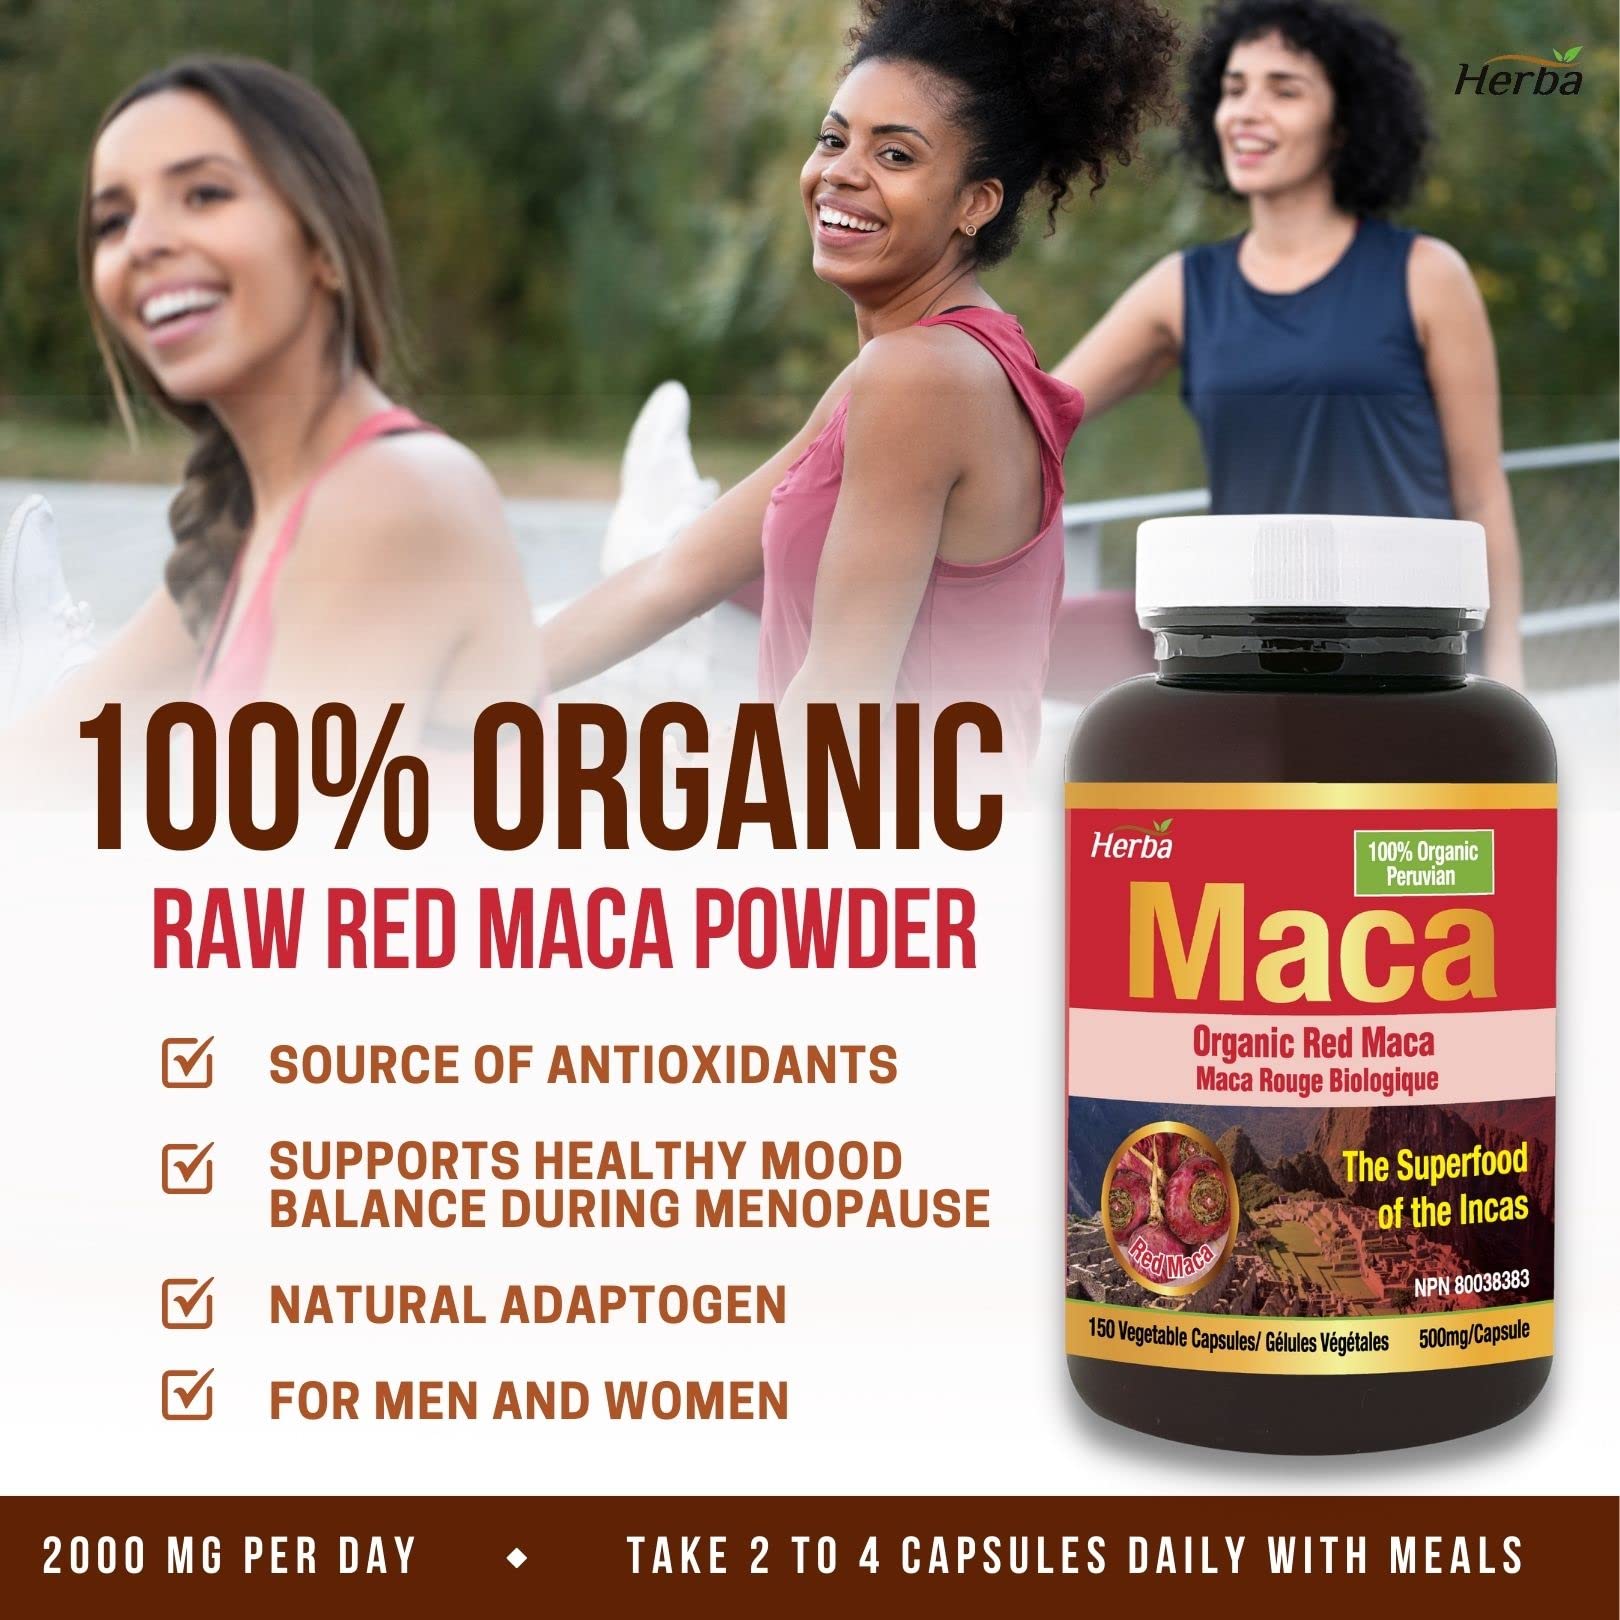 Herba Organic Red Maca Capsules for Women – 500mg, 150 Capsules